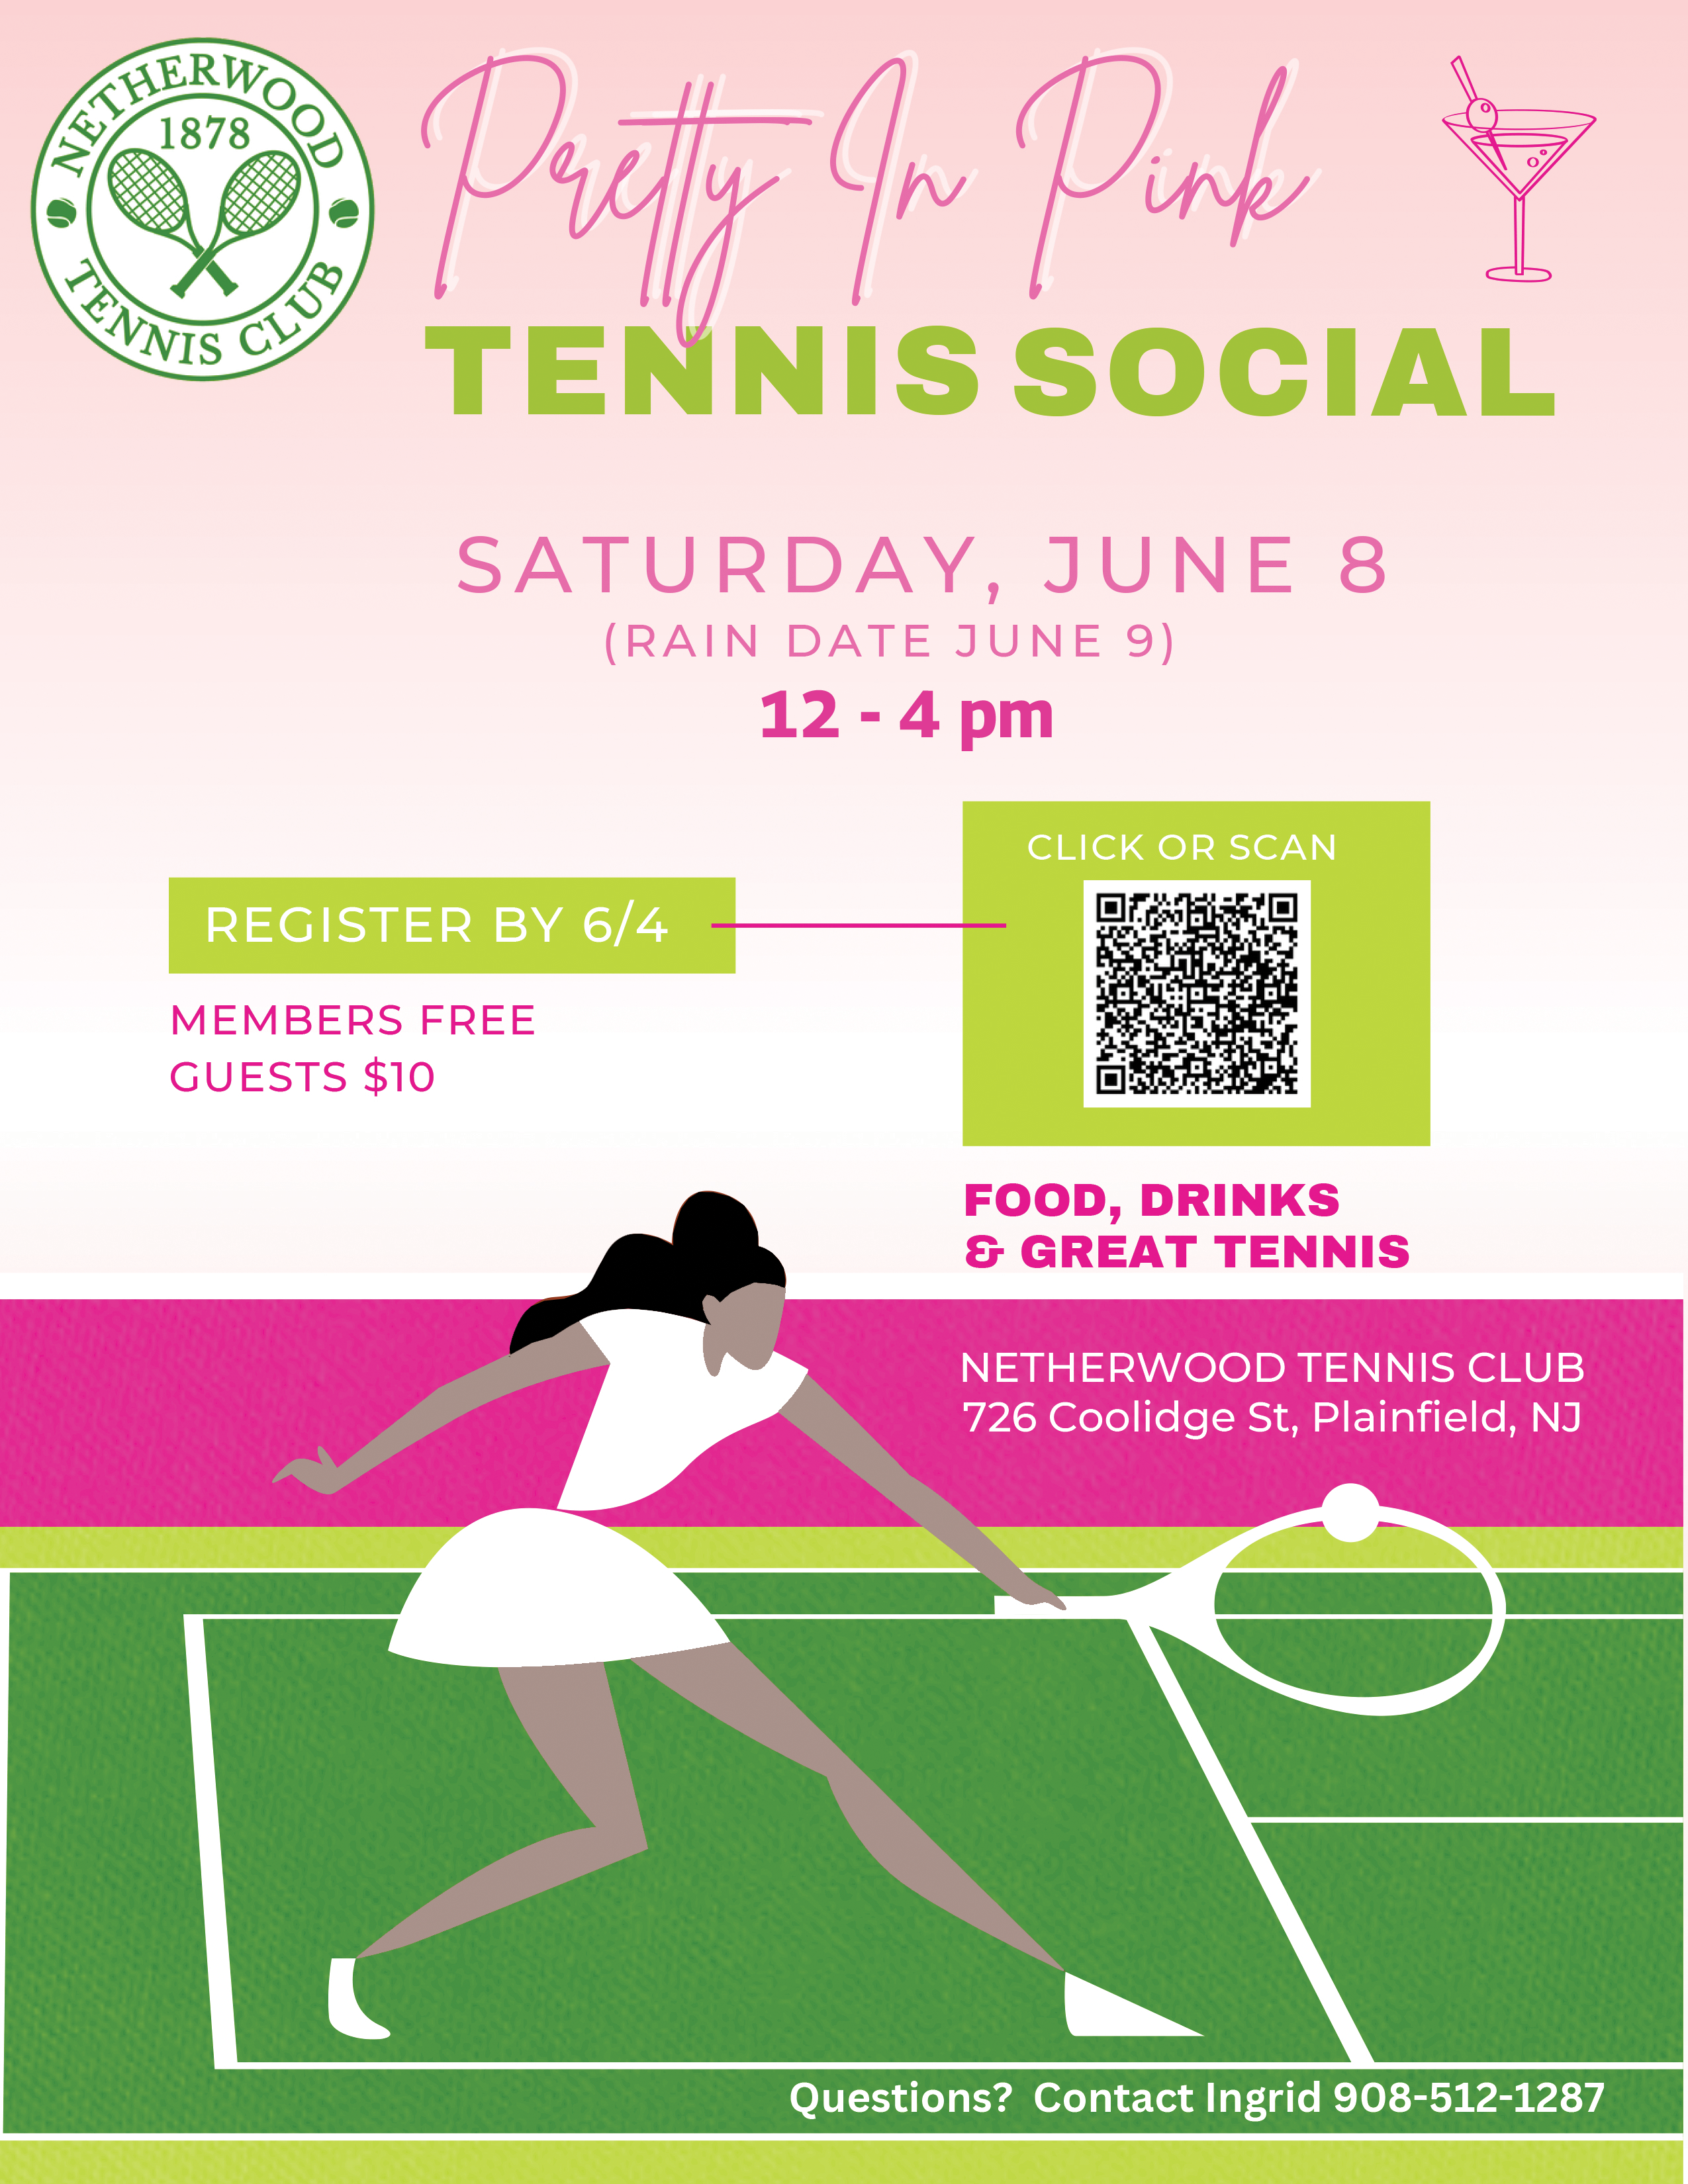 ladies' doubles tennis social at netherwood tennis club in plainfield nj